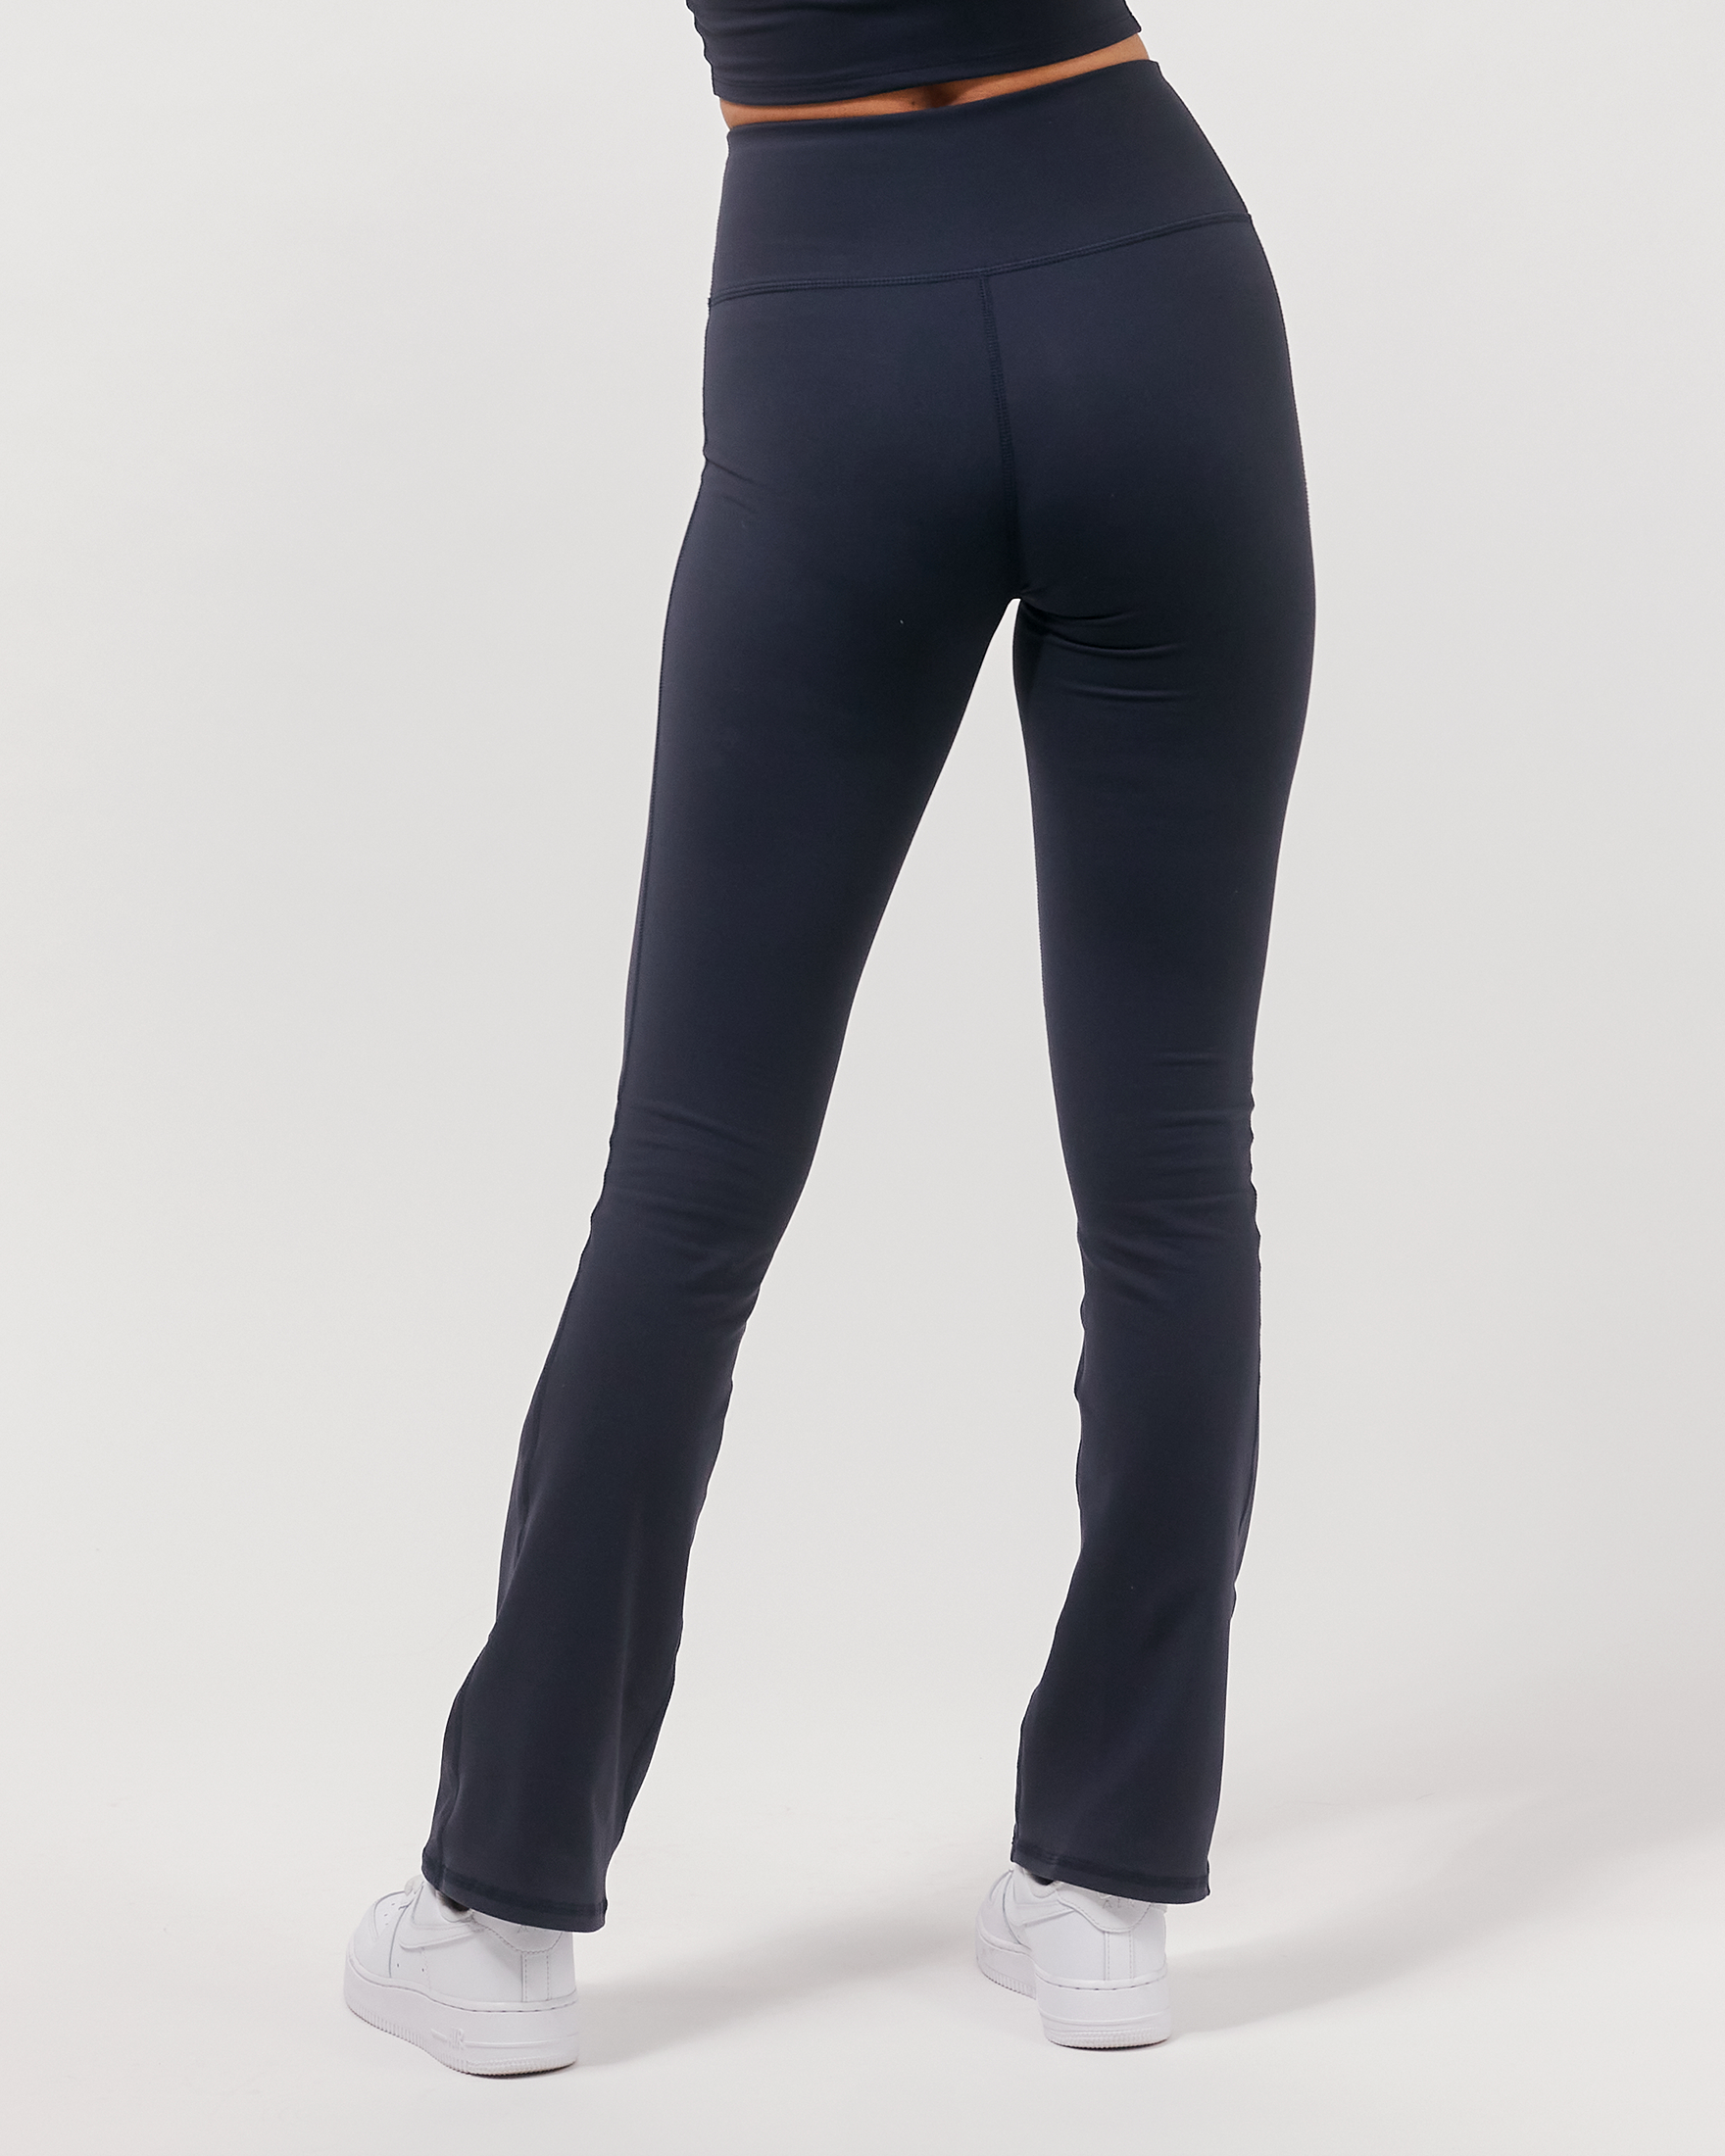 Buy Balleay Art Bootcut Yoga Pants for Women with Pockets - Dress Yoga Pants  for Women Long Bootleg Workout Pants (Black, M) at Amazon.in